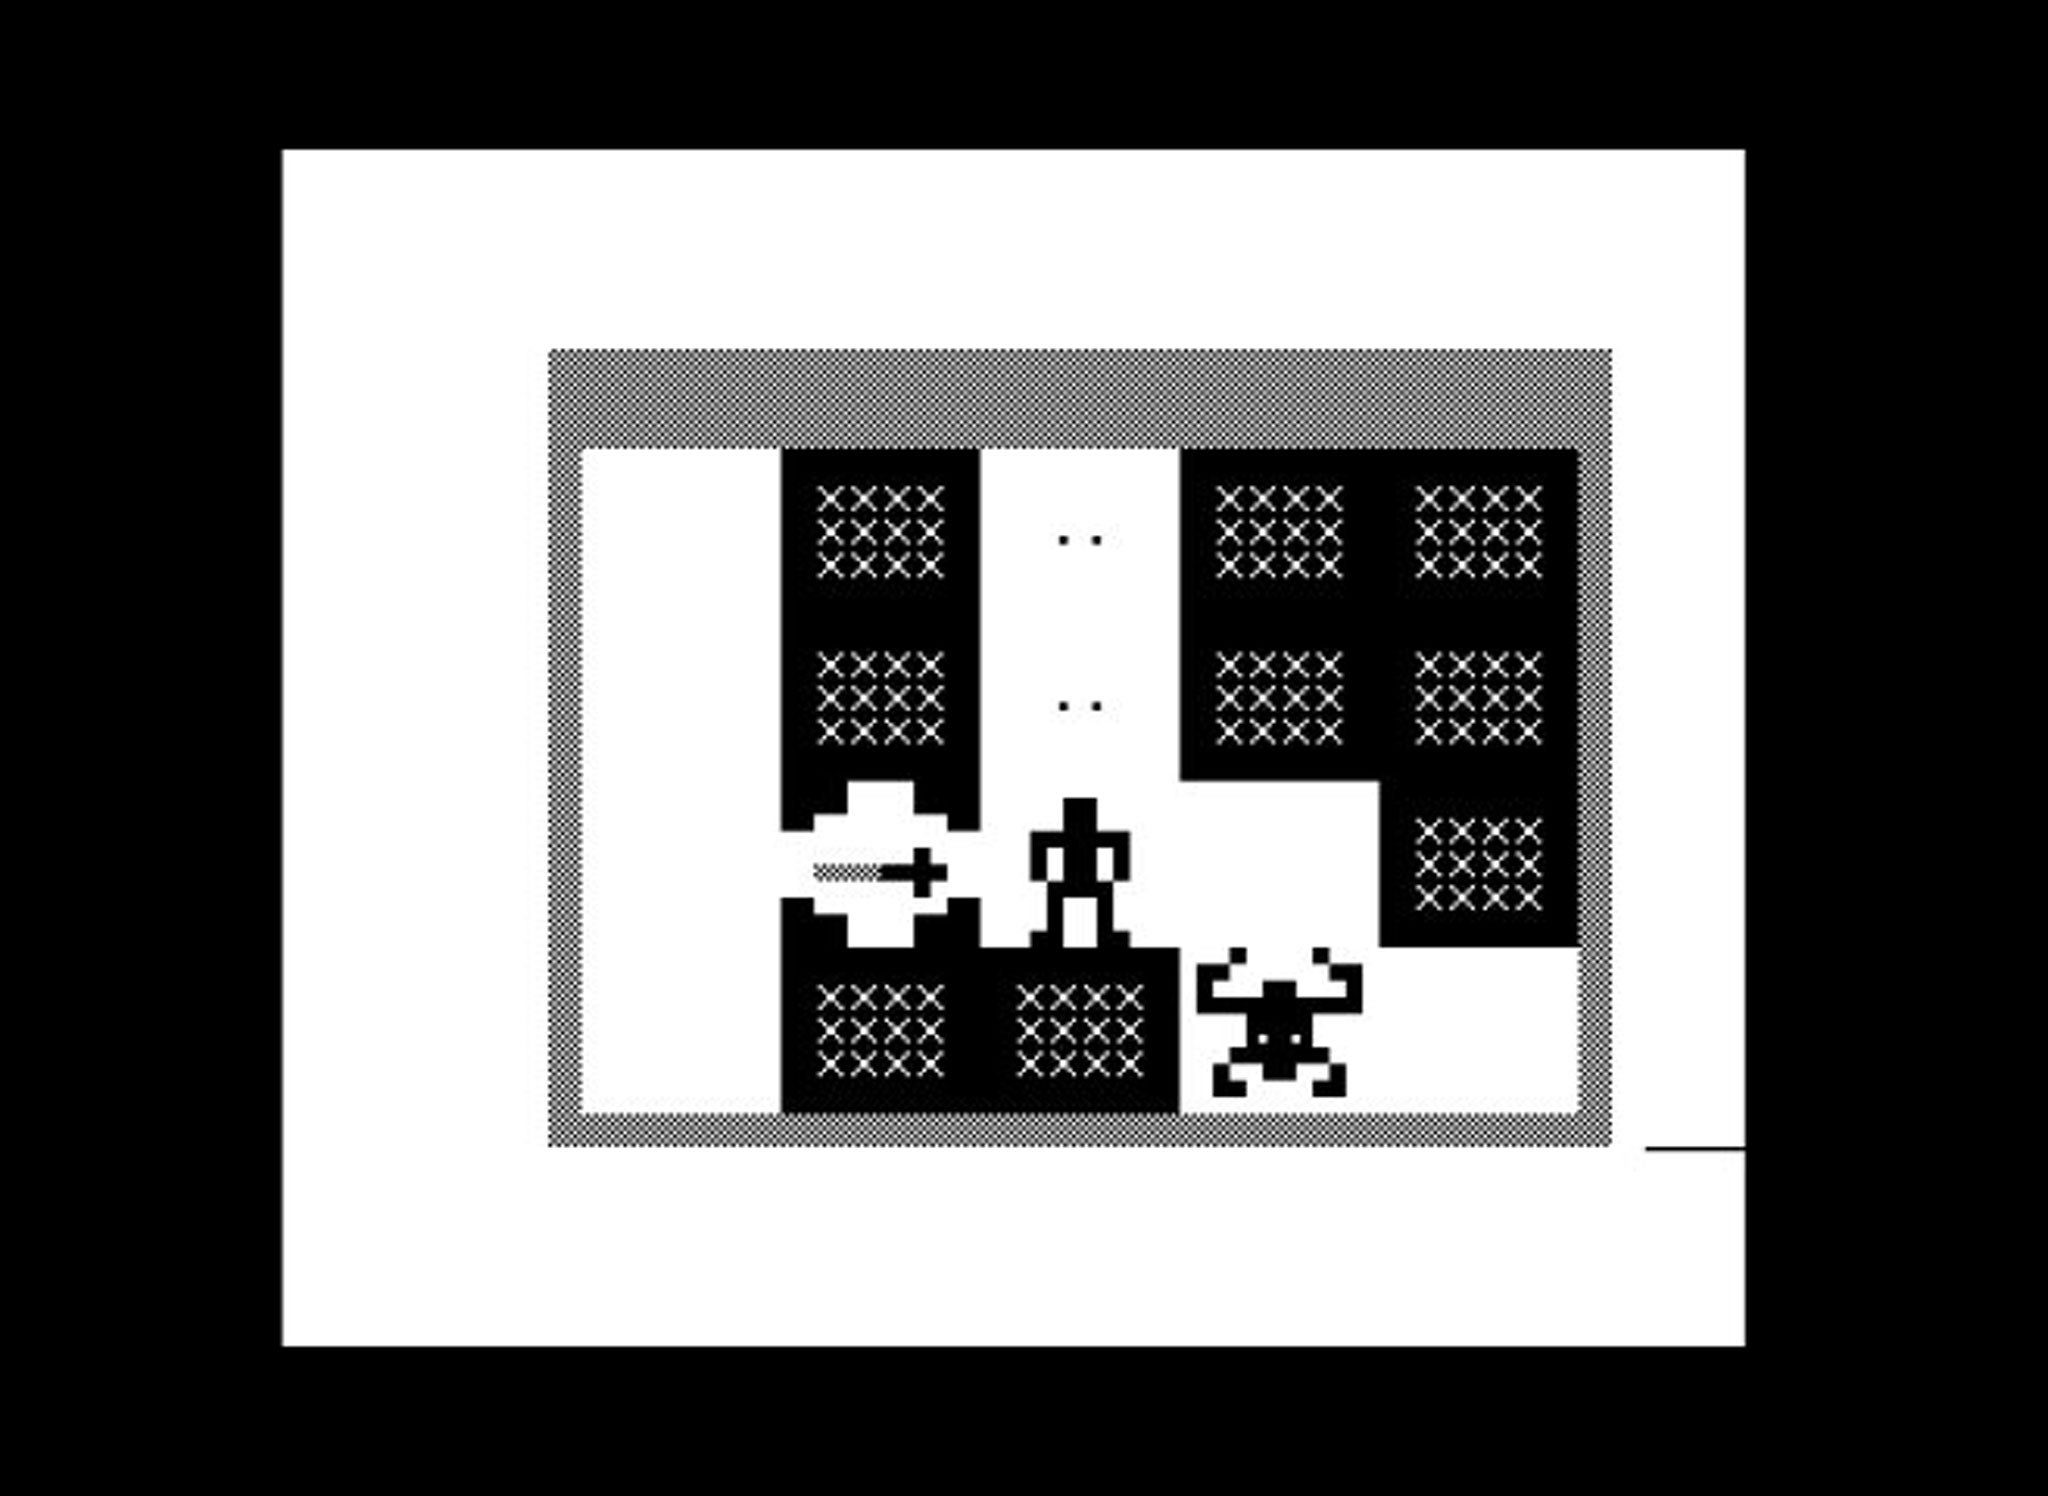 ZX81 action-adventure maze game 'Mazogs' (1982)